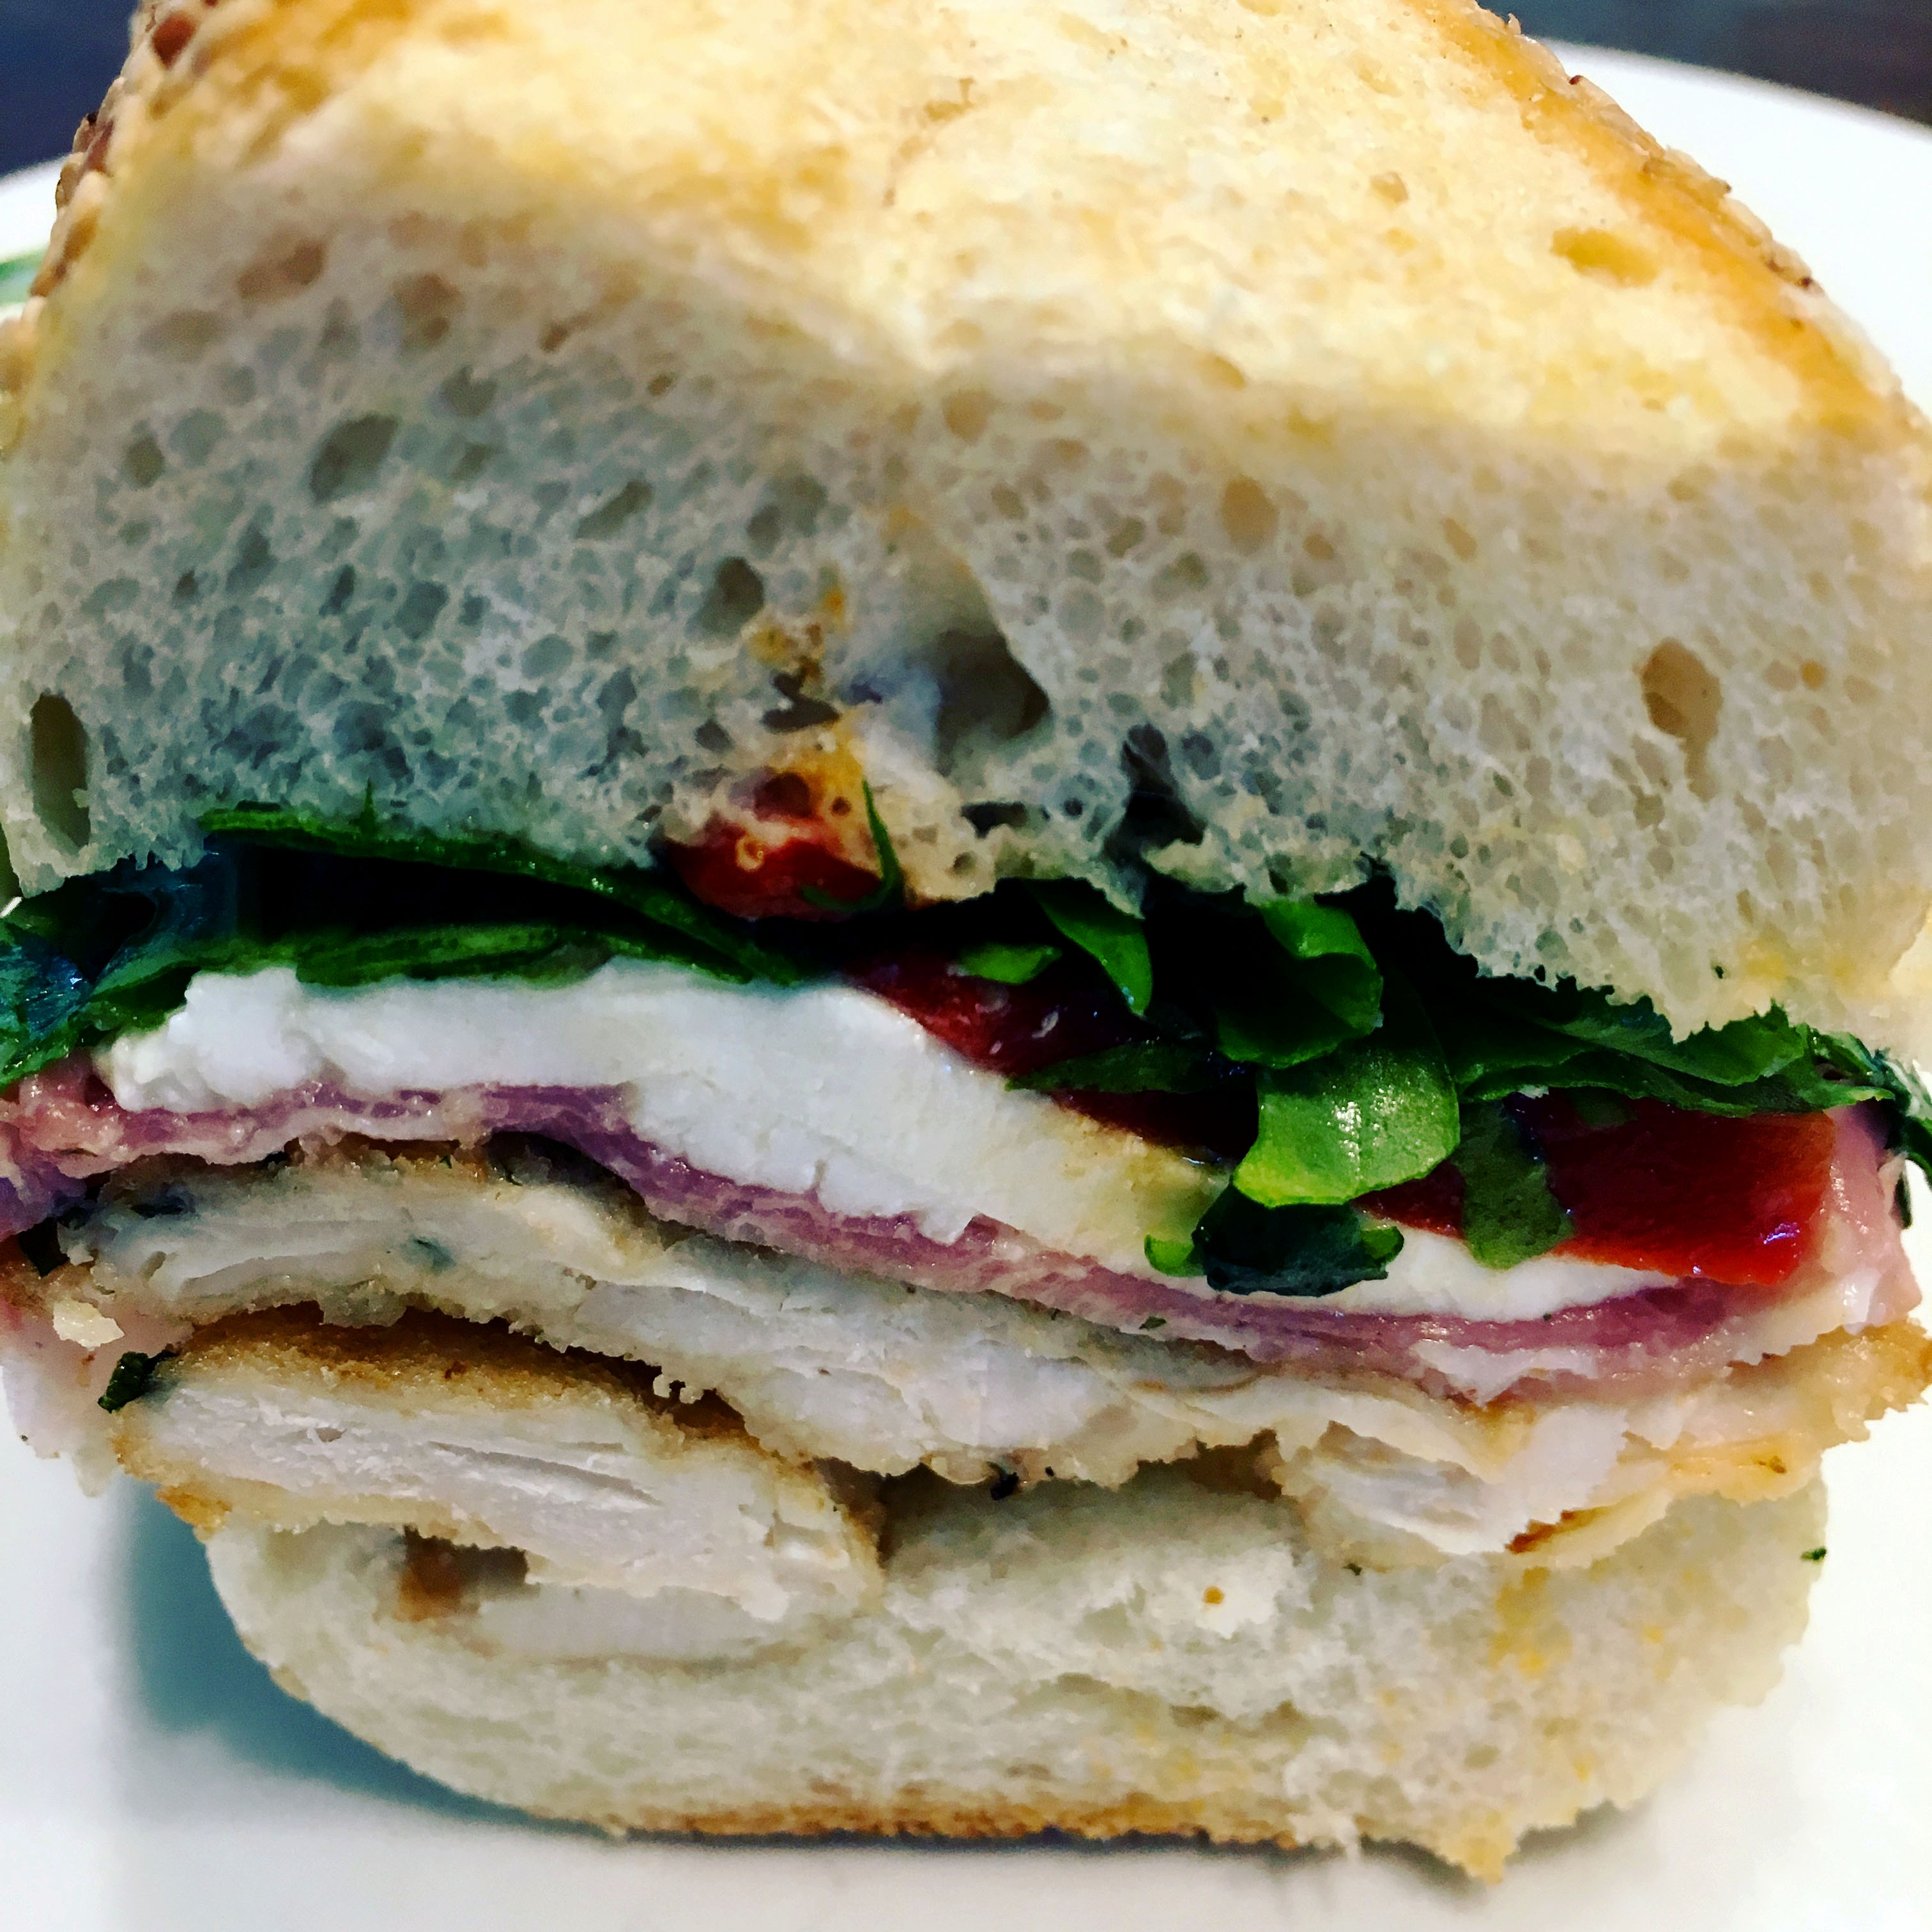 Montclair Eats: An Italian sandwich makes the mouth water